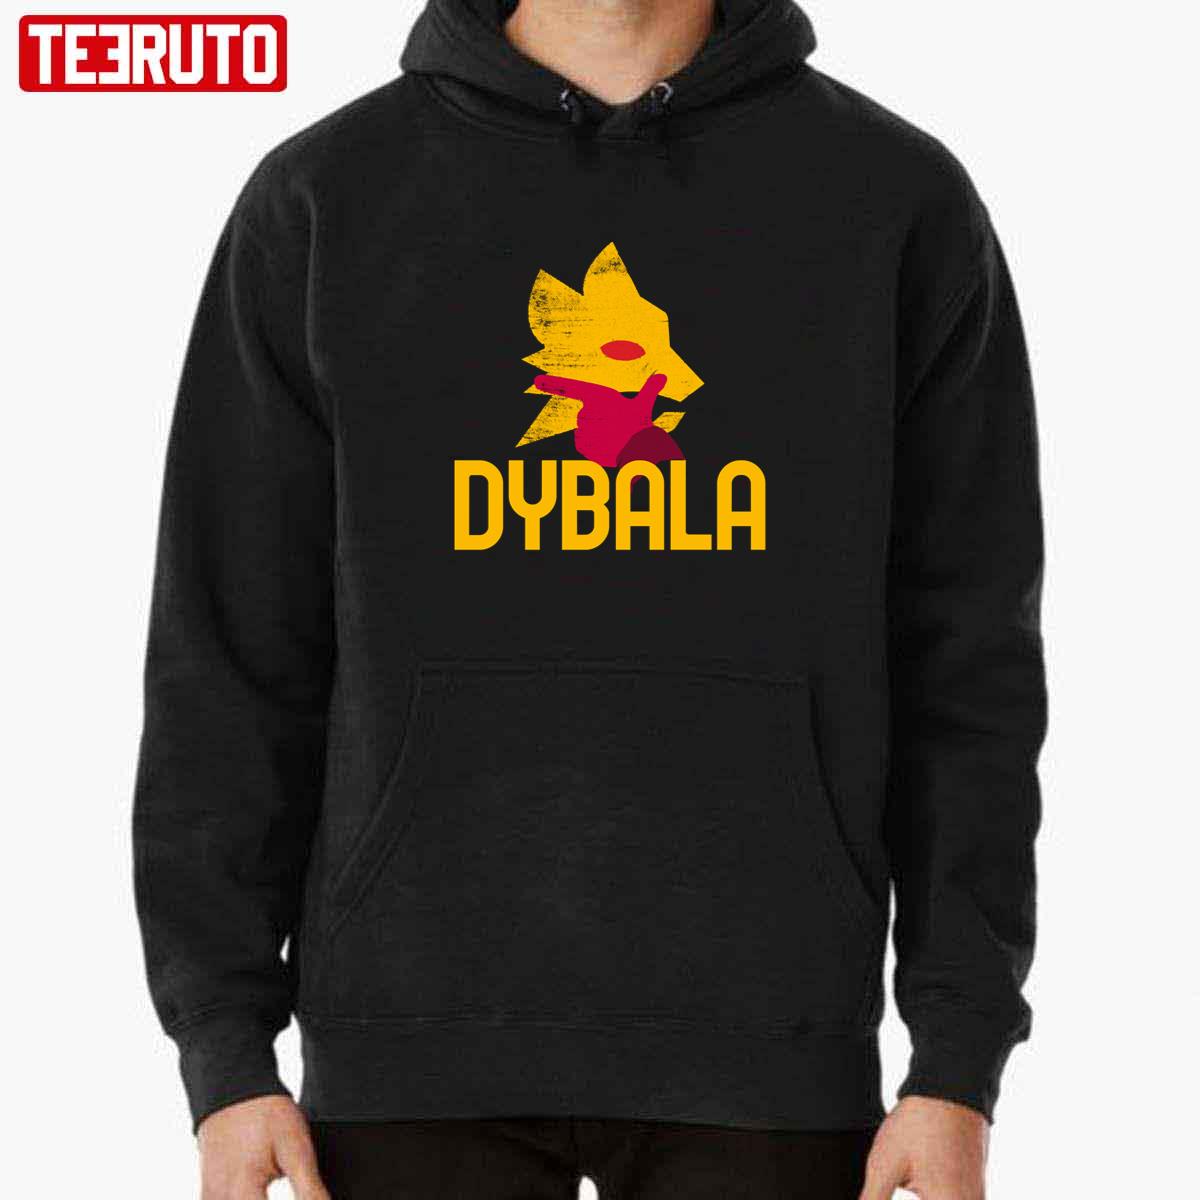 Dybala Roma Unisex Sweatshirt - Teeruto